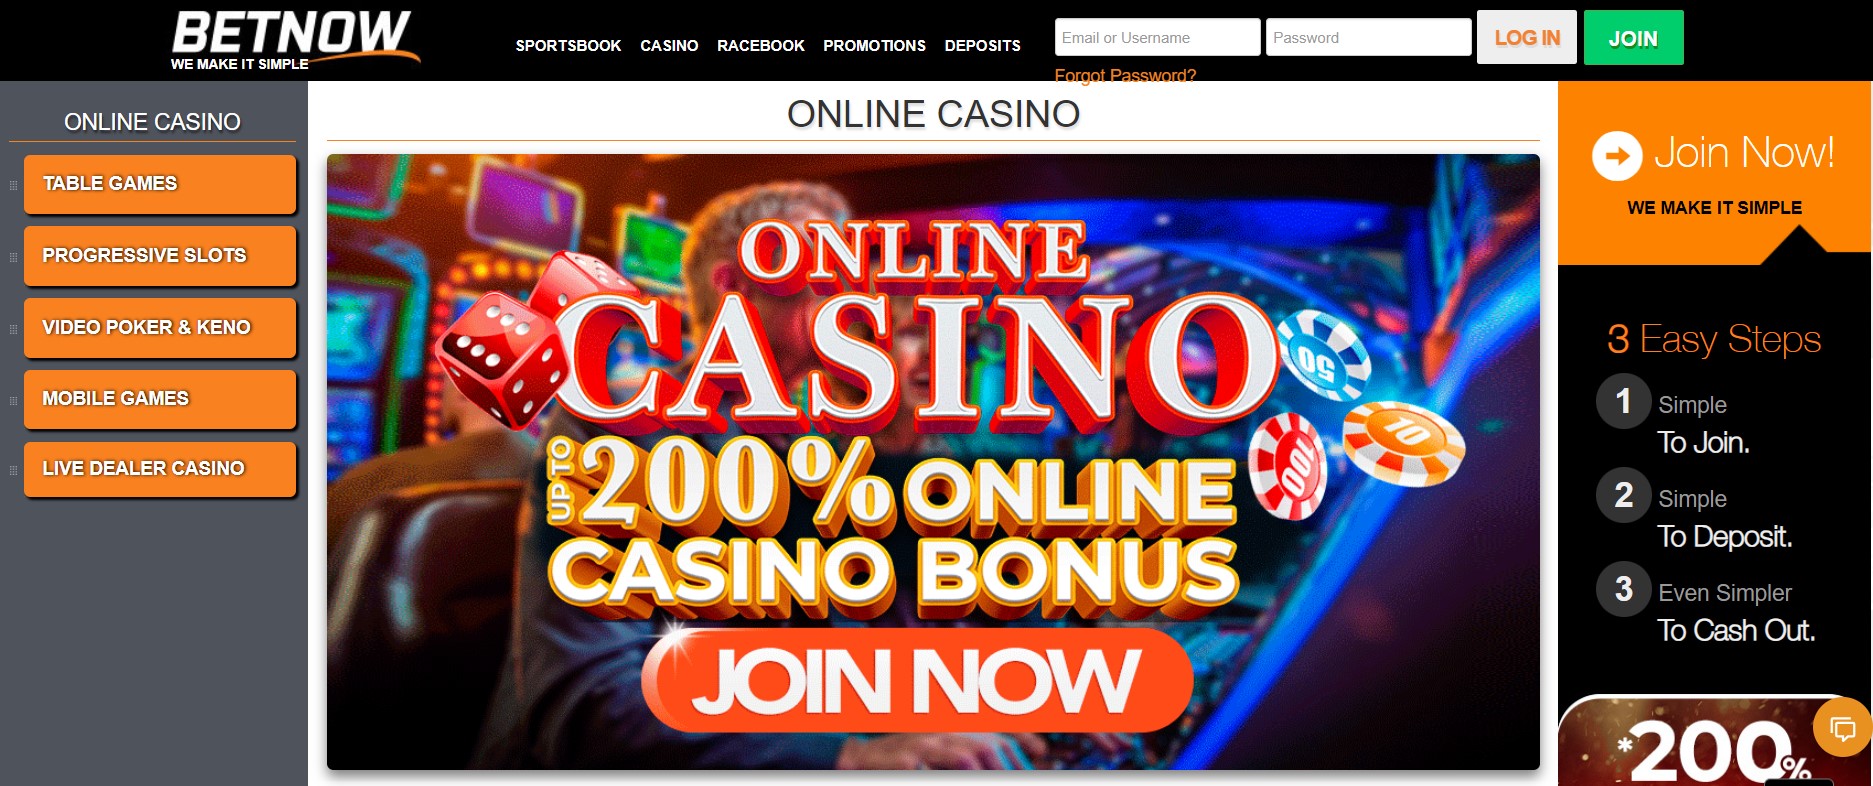 BetNow Casino Review